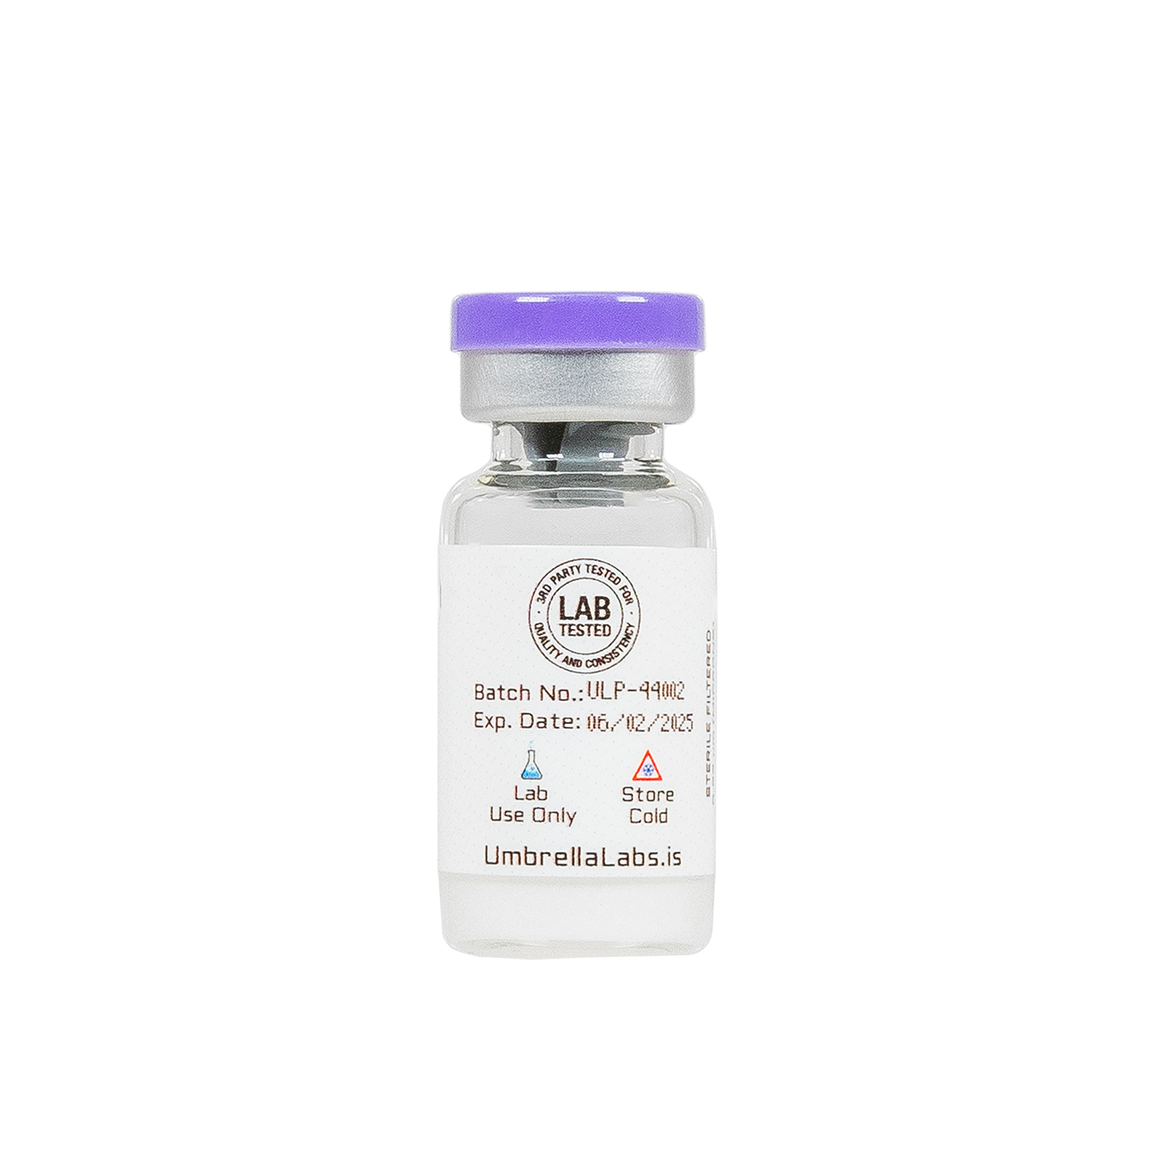 oxytocin peptide liquid spray 15ml bottle